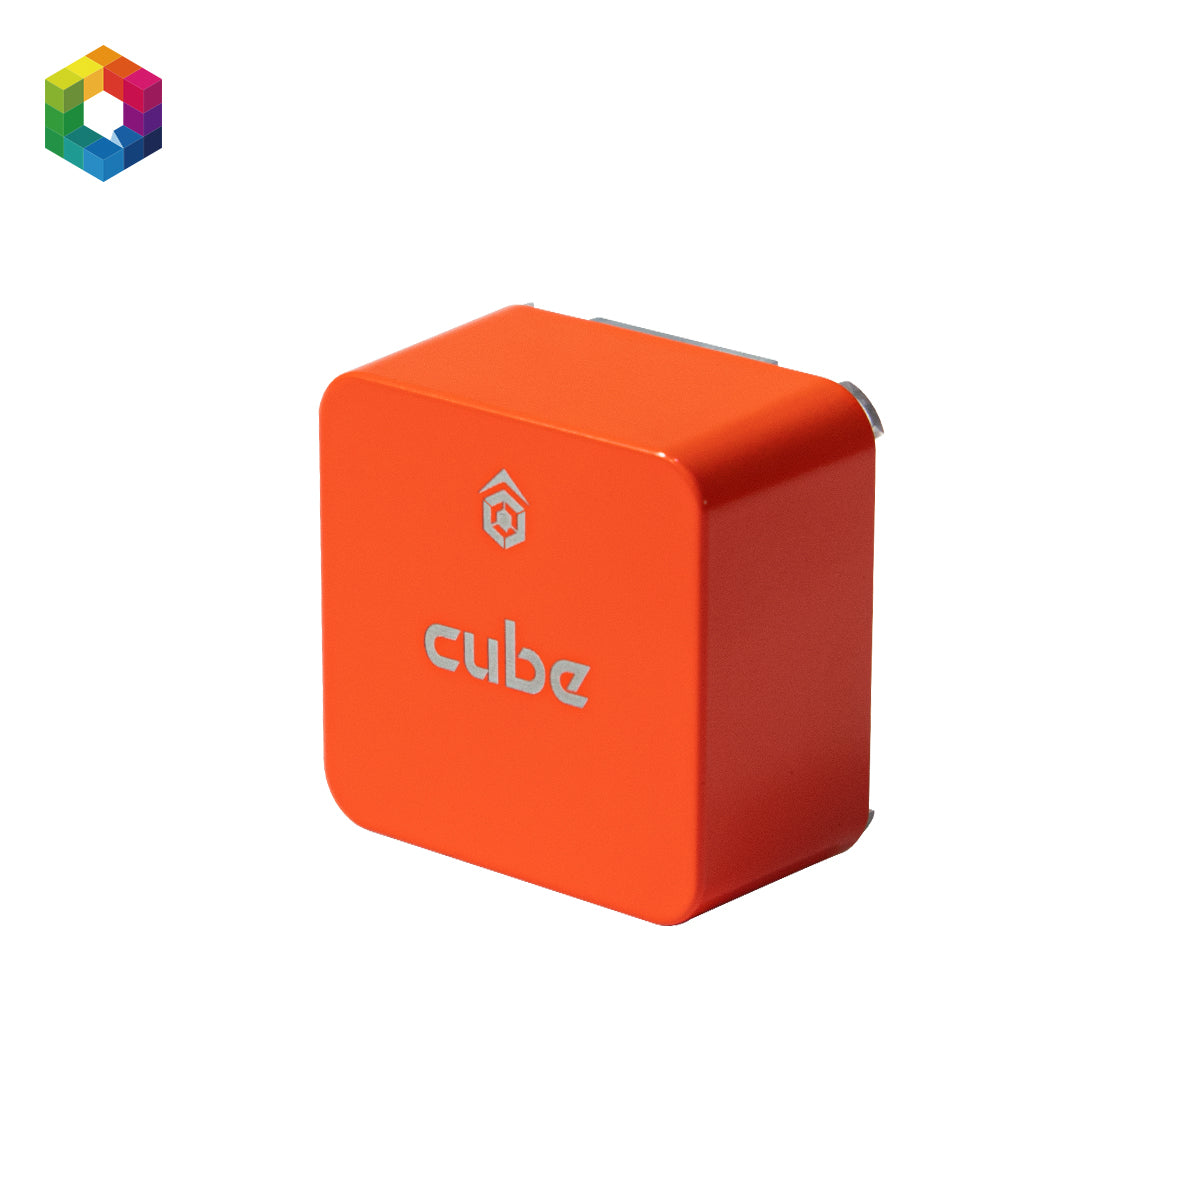 The Cube Orange FD